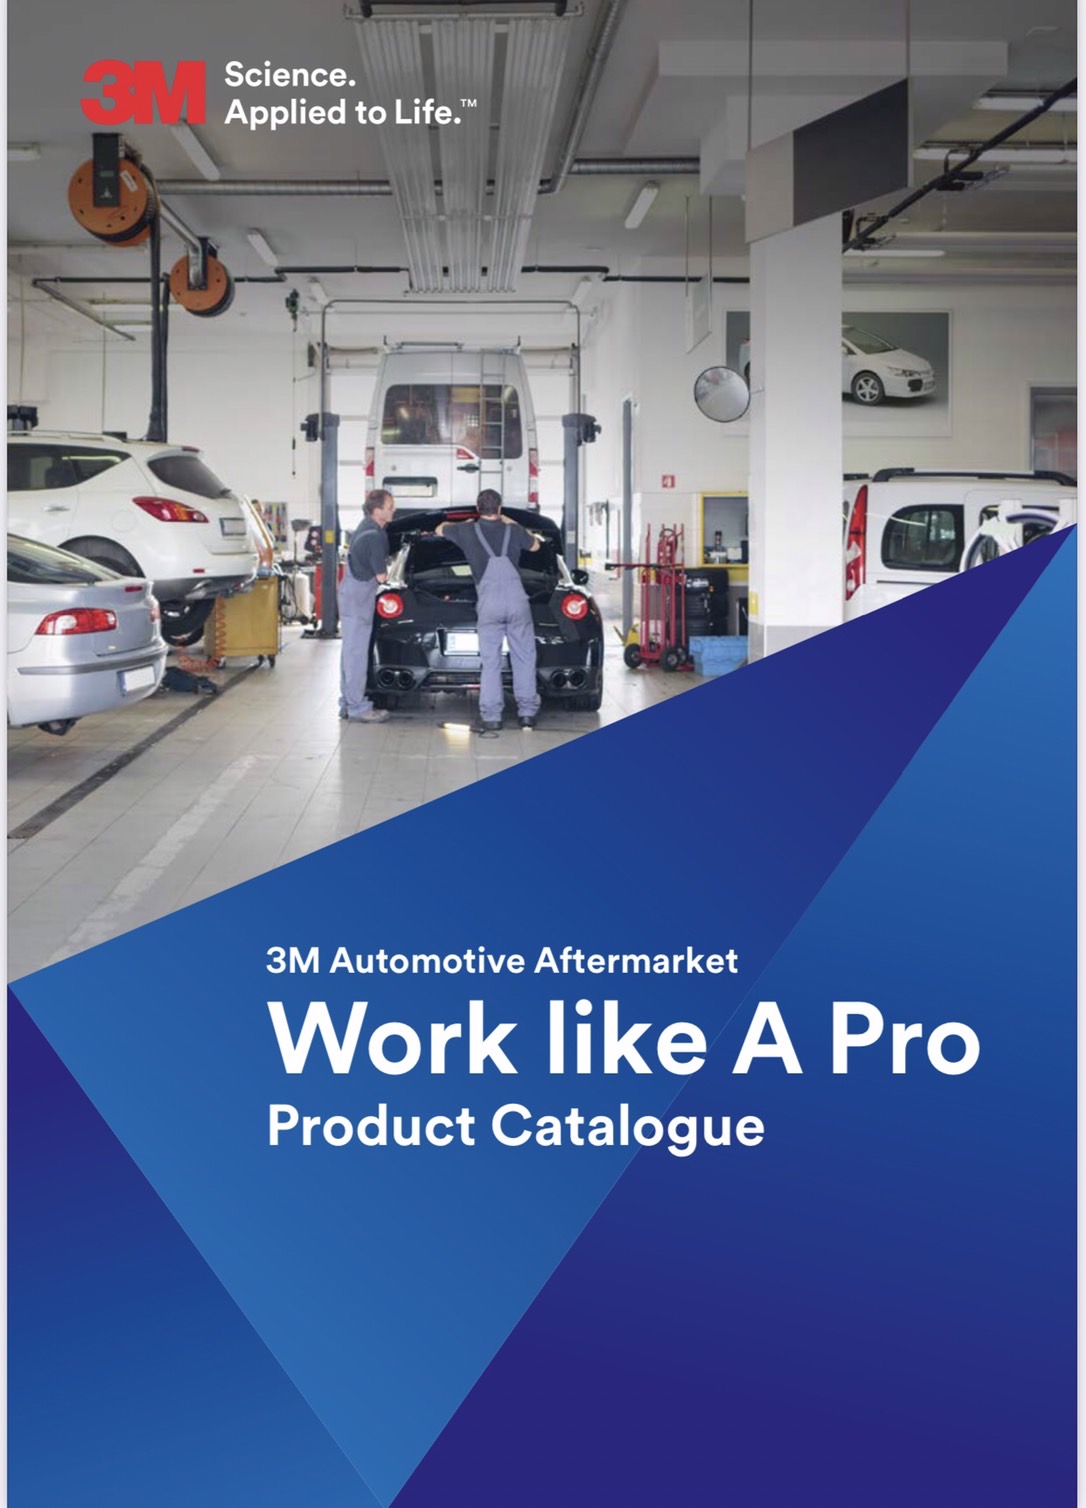 3M Automotive Aftermarket Work like pro